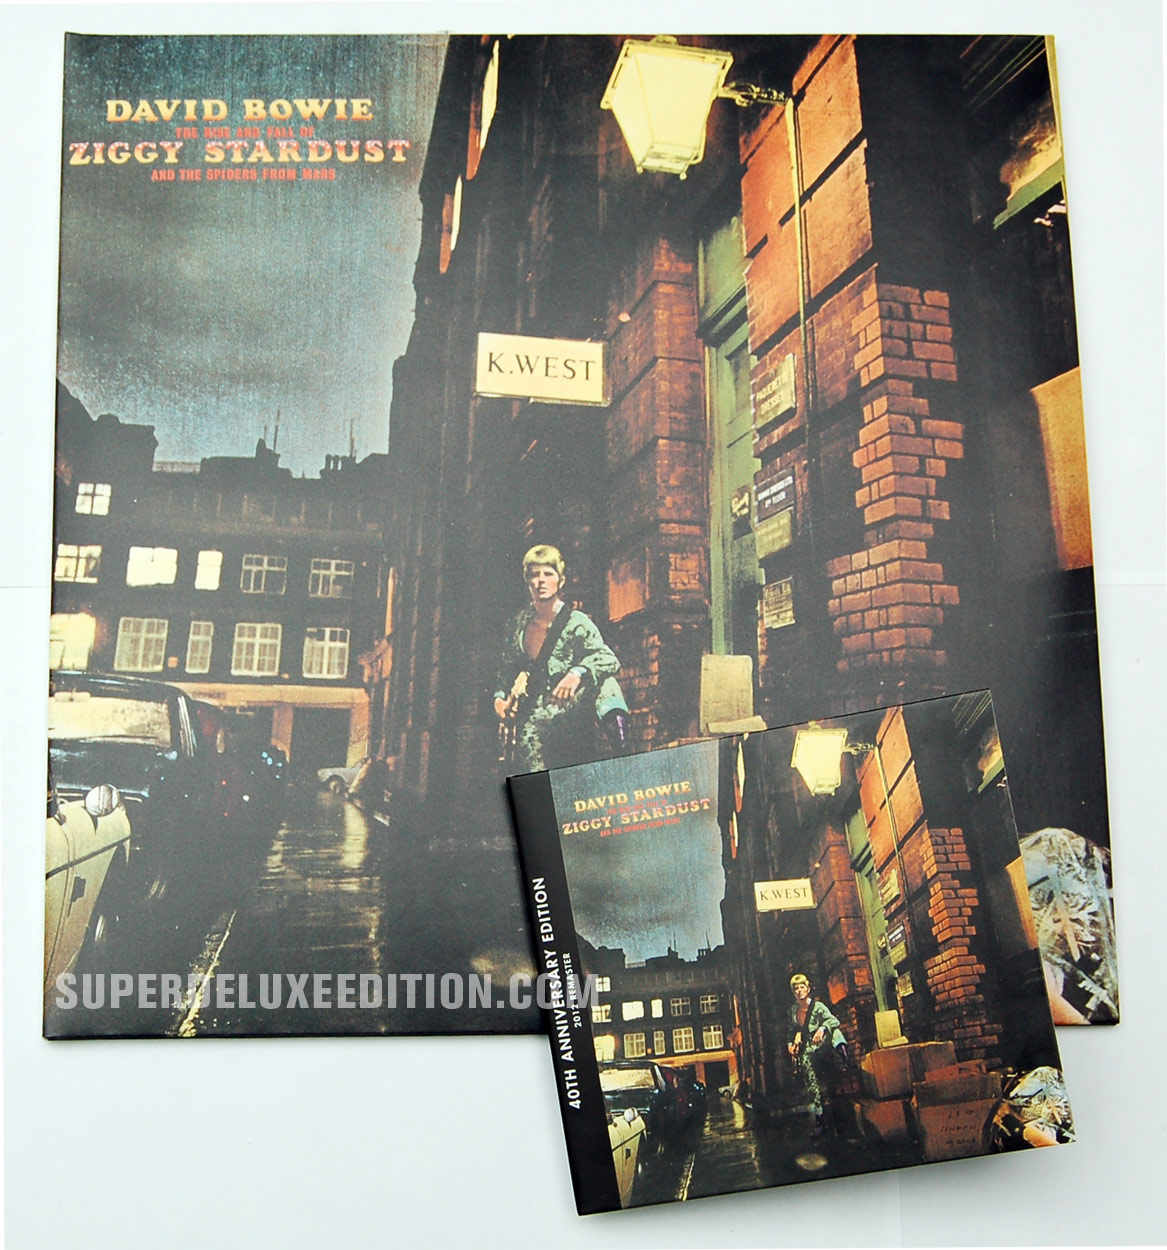 David Bowie “ziggy Stardust” 40th Anniversary Cd And Lpdvd Reissue Superdeluxeedition 0433